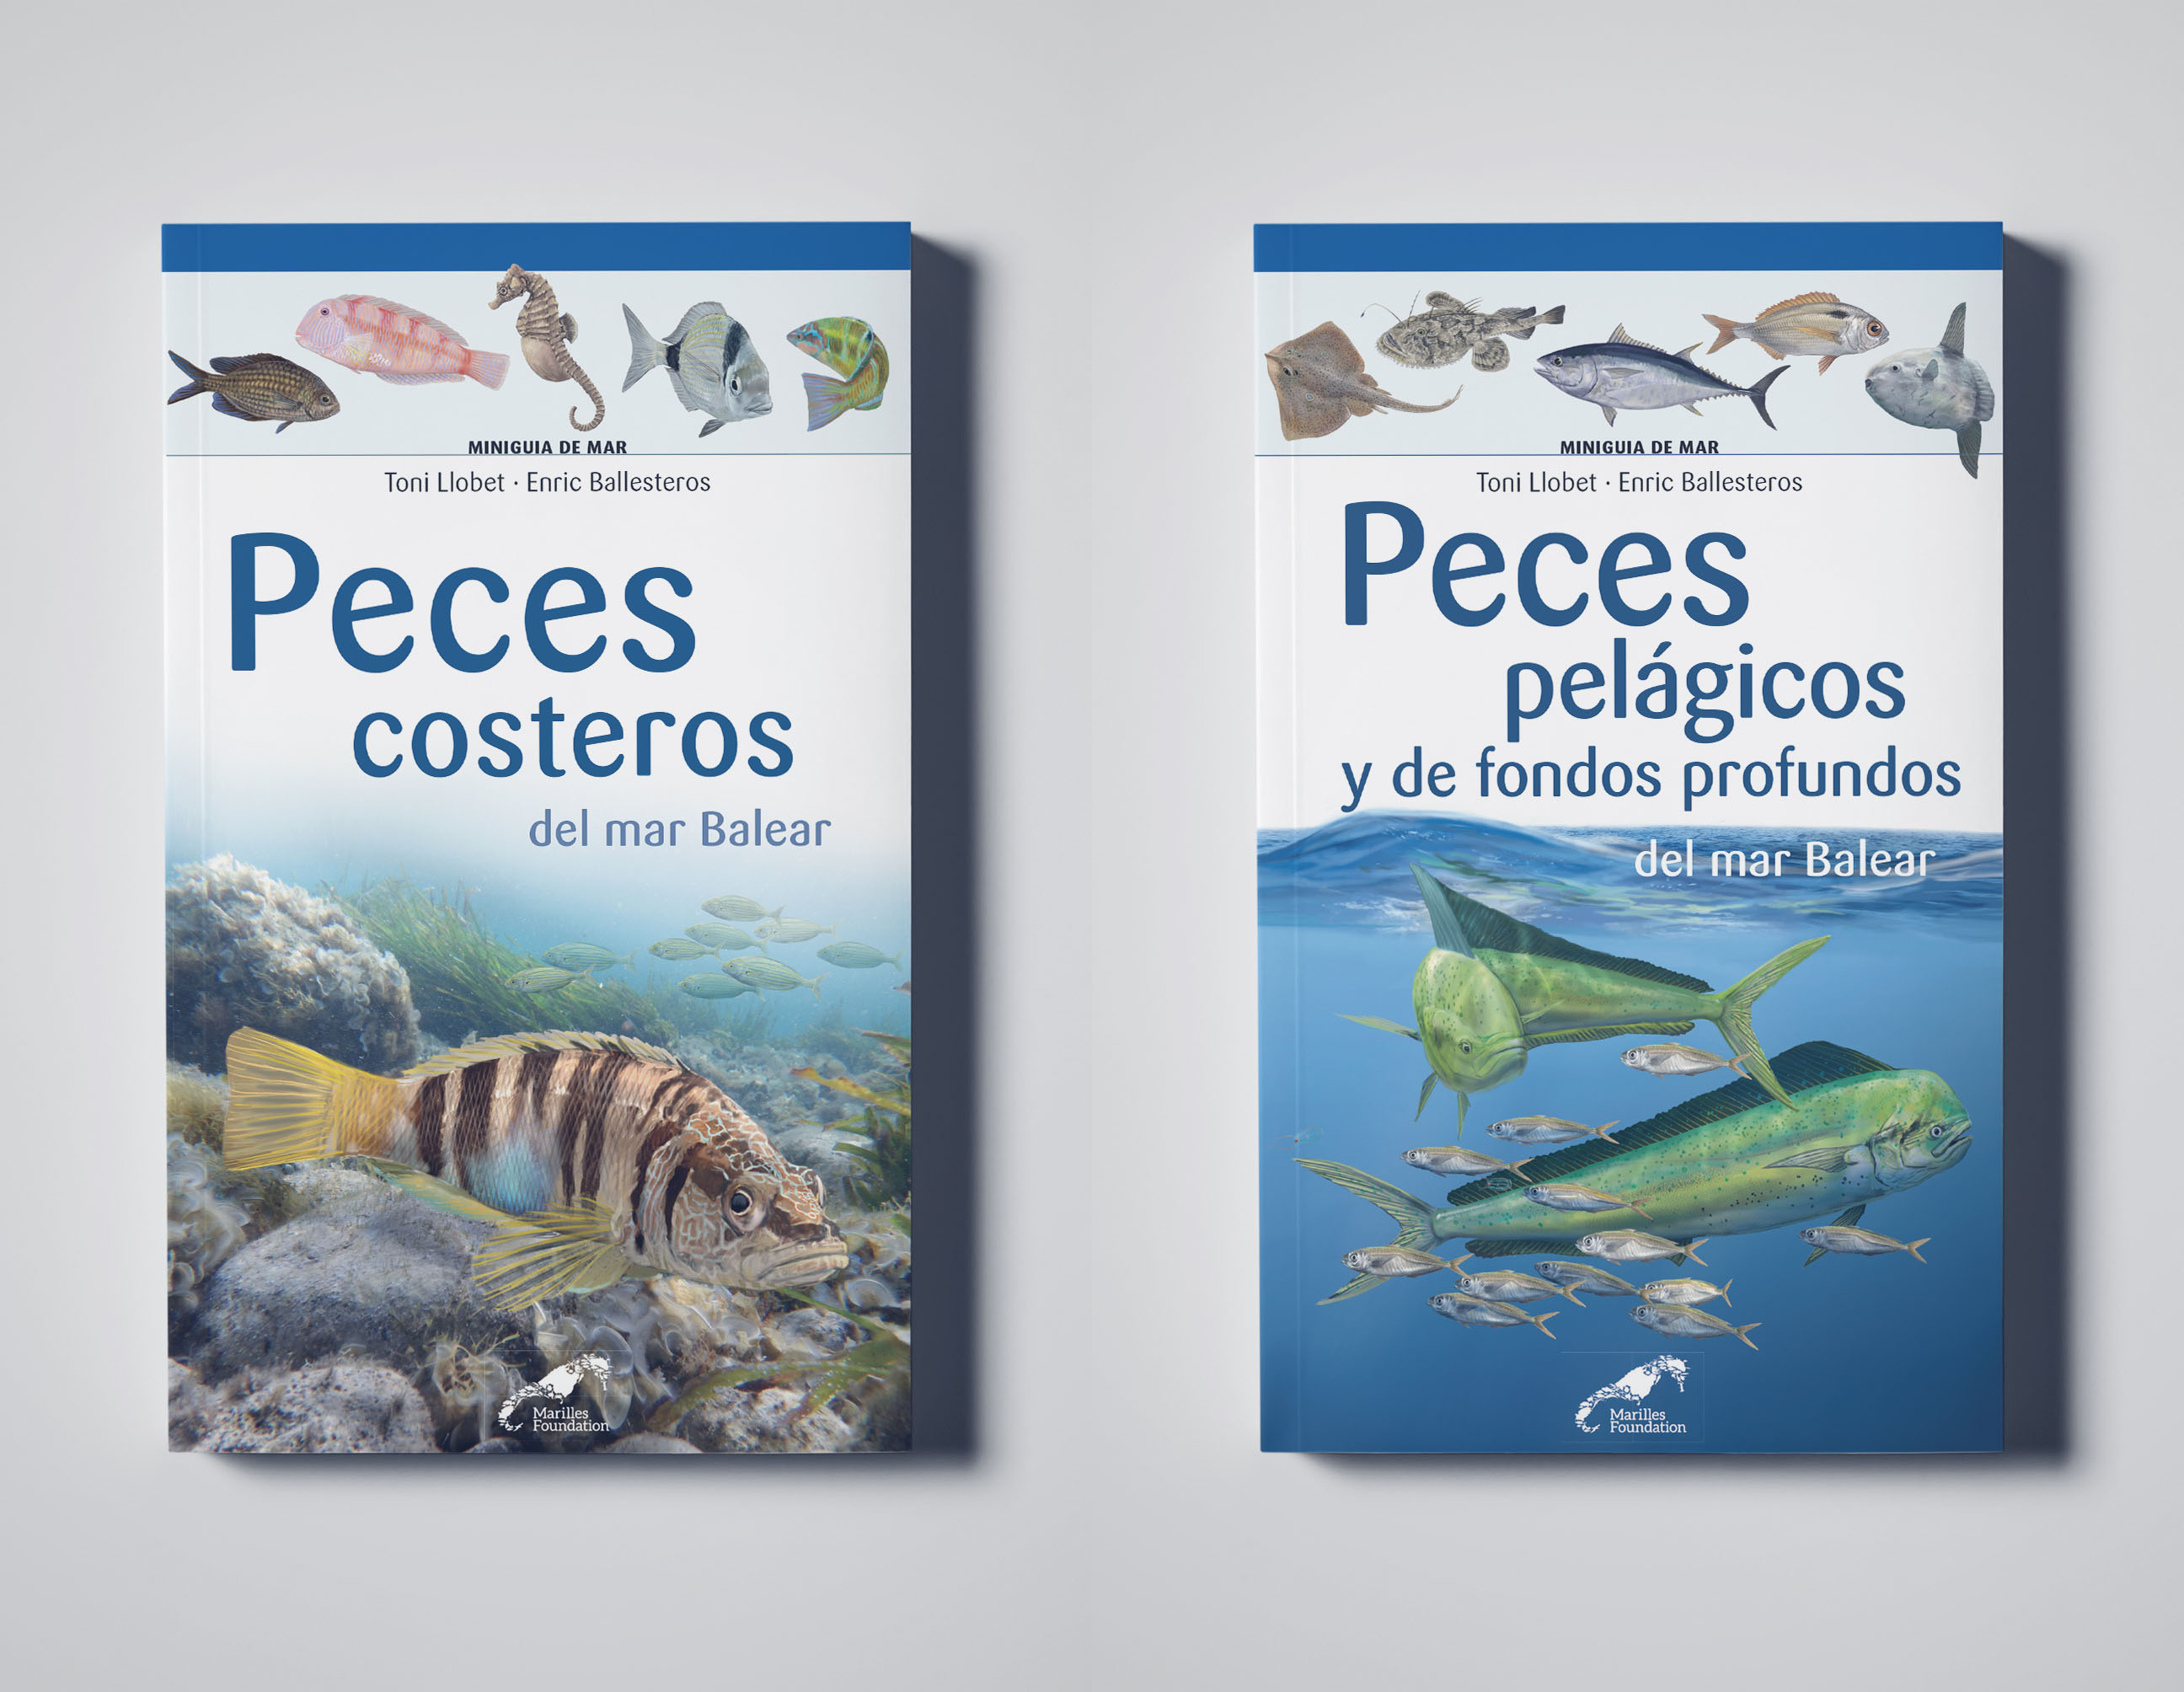 Marine wildlife mini-guides for the Balearic Sea